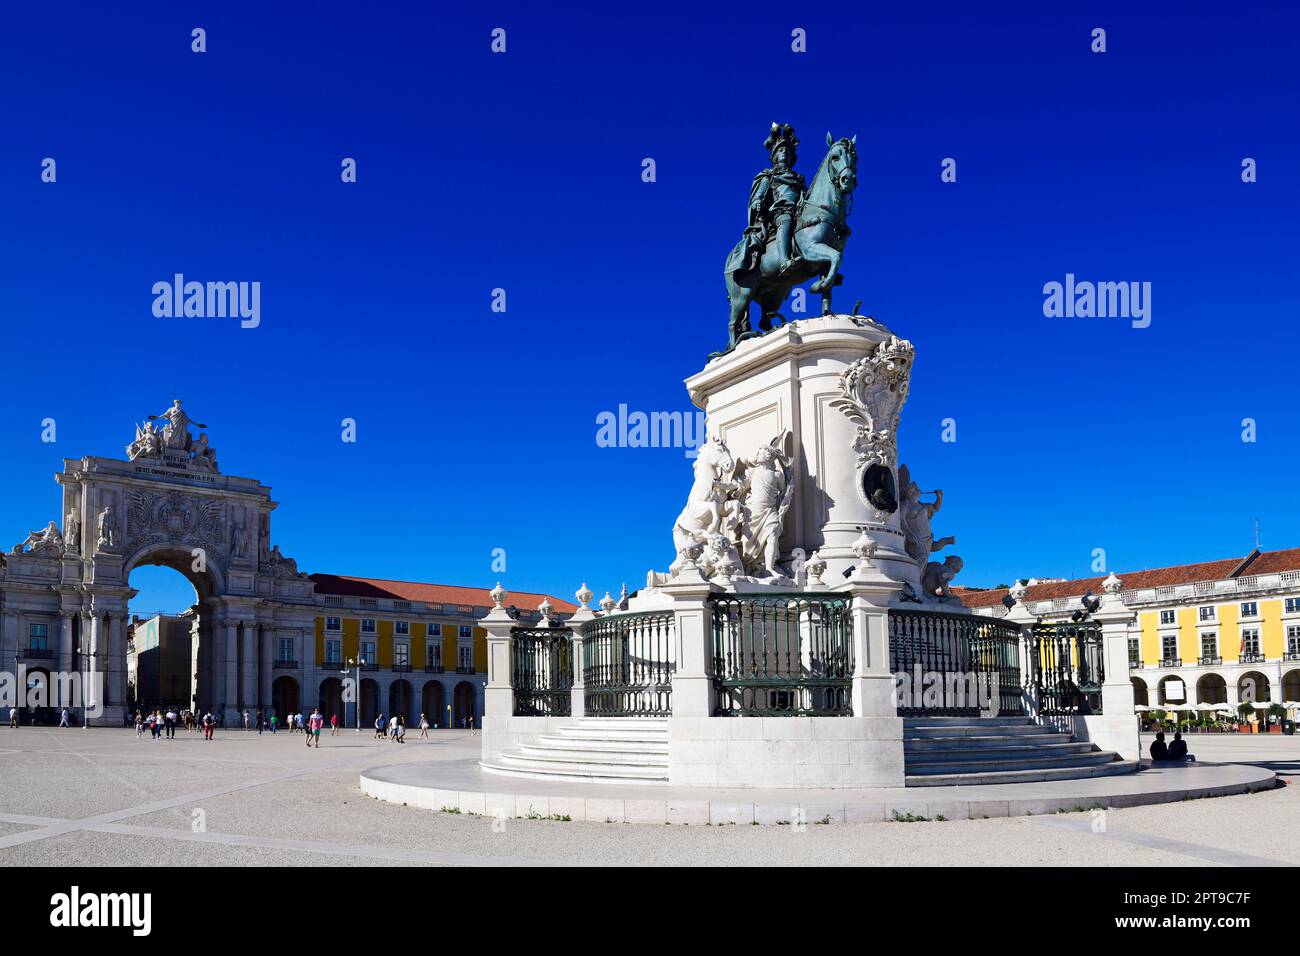 Statua equestre di Re Jose i e arco trionfale Arco da Rua Augusta, Praca do Comercio, Baixa, Lisbona, Portogallo Foto Stock